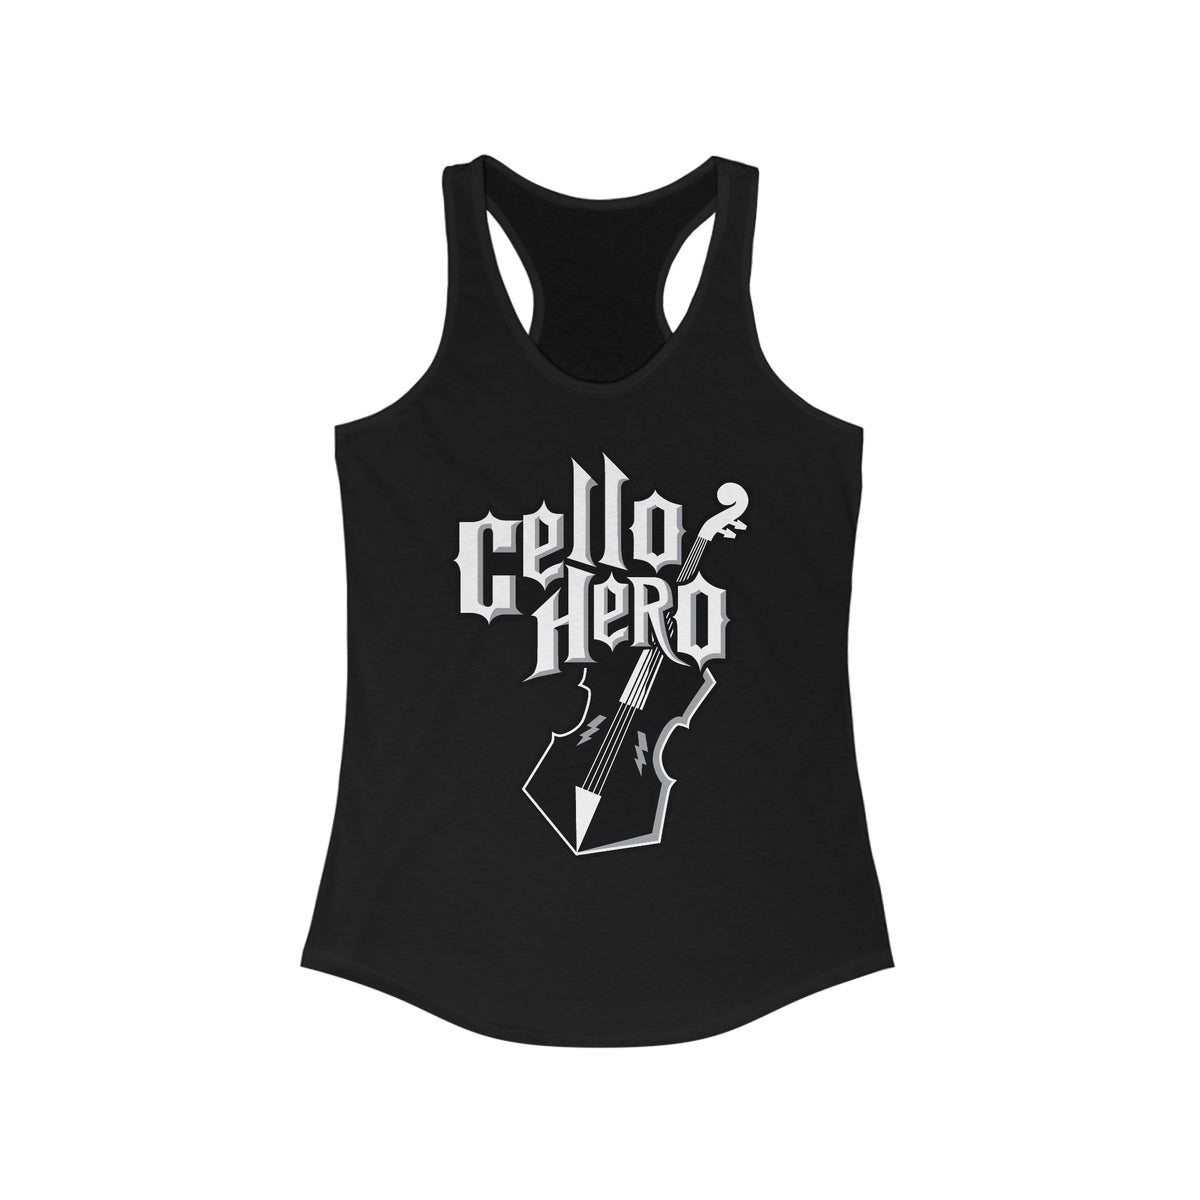 Cello Hero - Women’s Racerback Tank